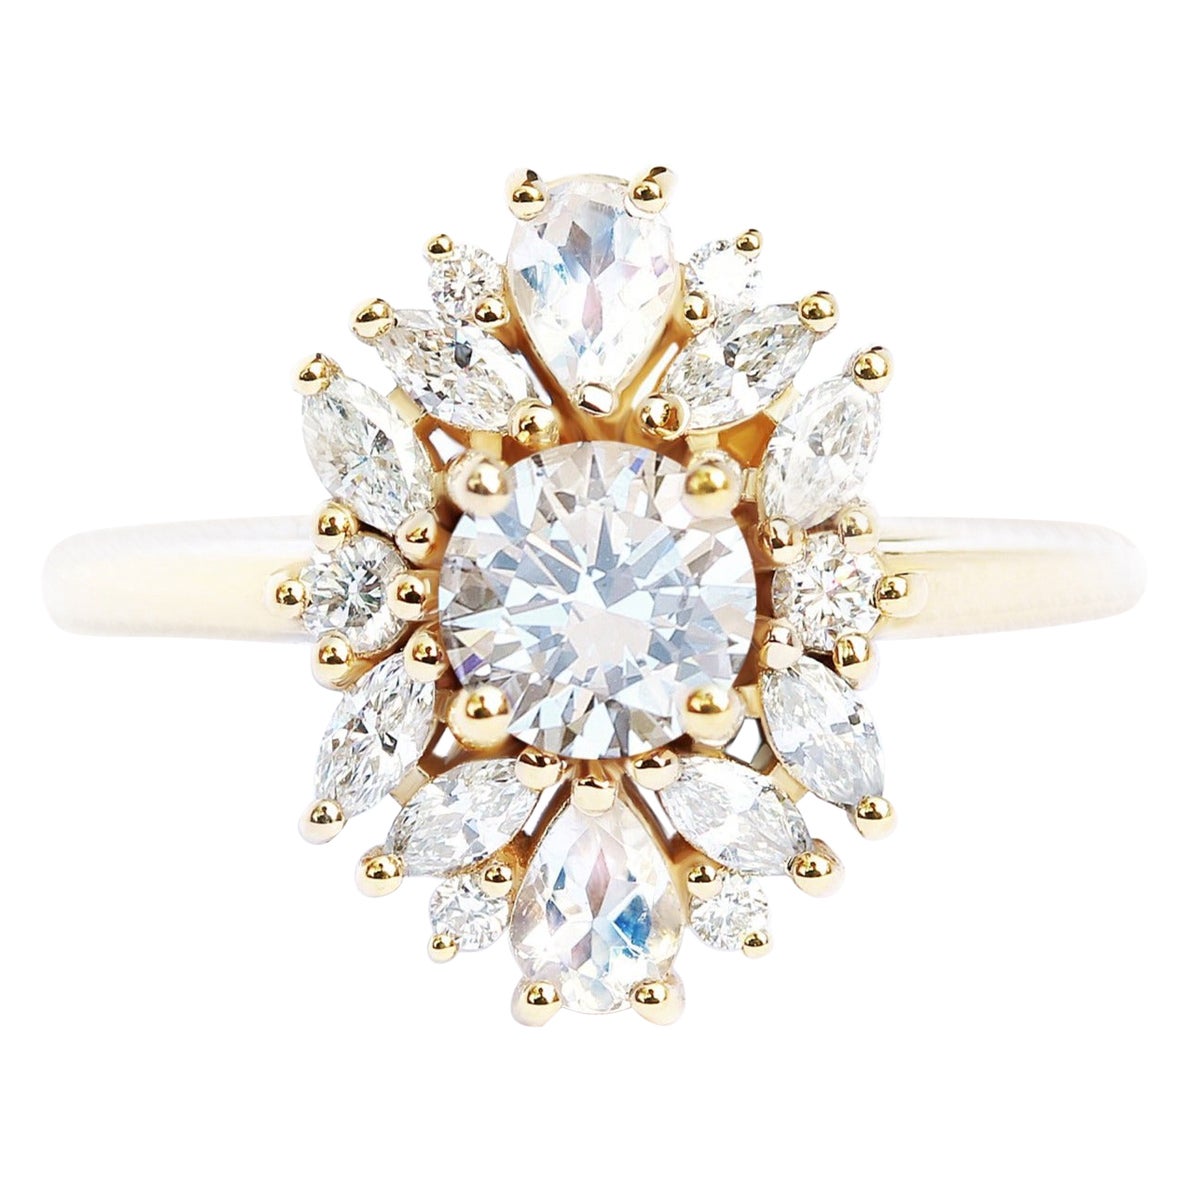 Diamond Cluster Unique and Elegant Engagement Ring, Alternative Bride "Odisea" For Sale